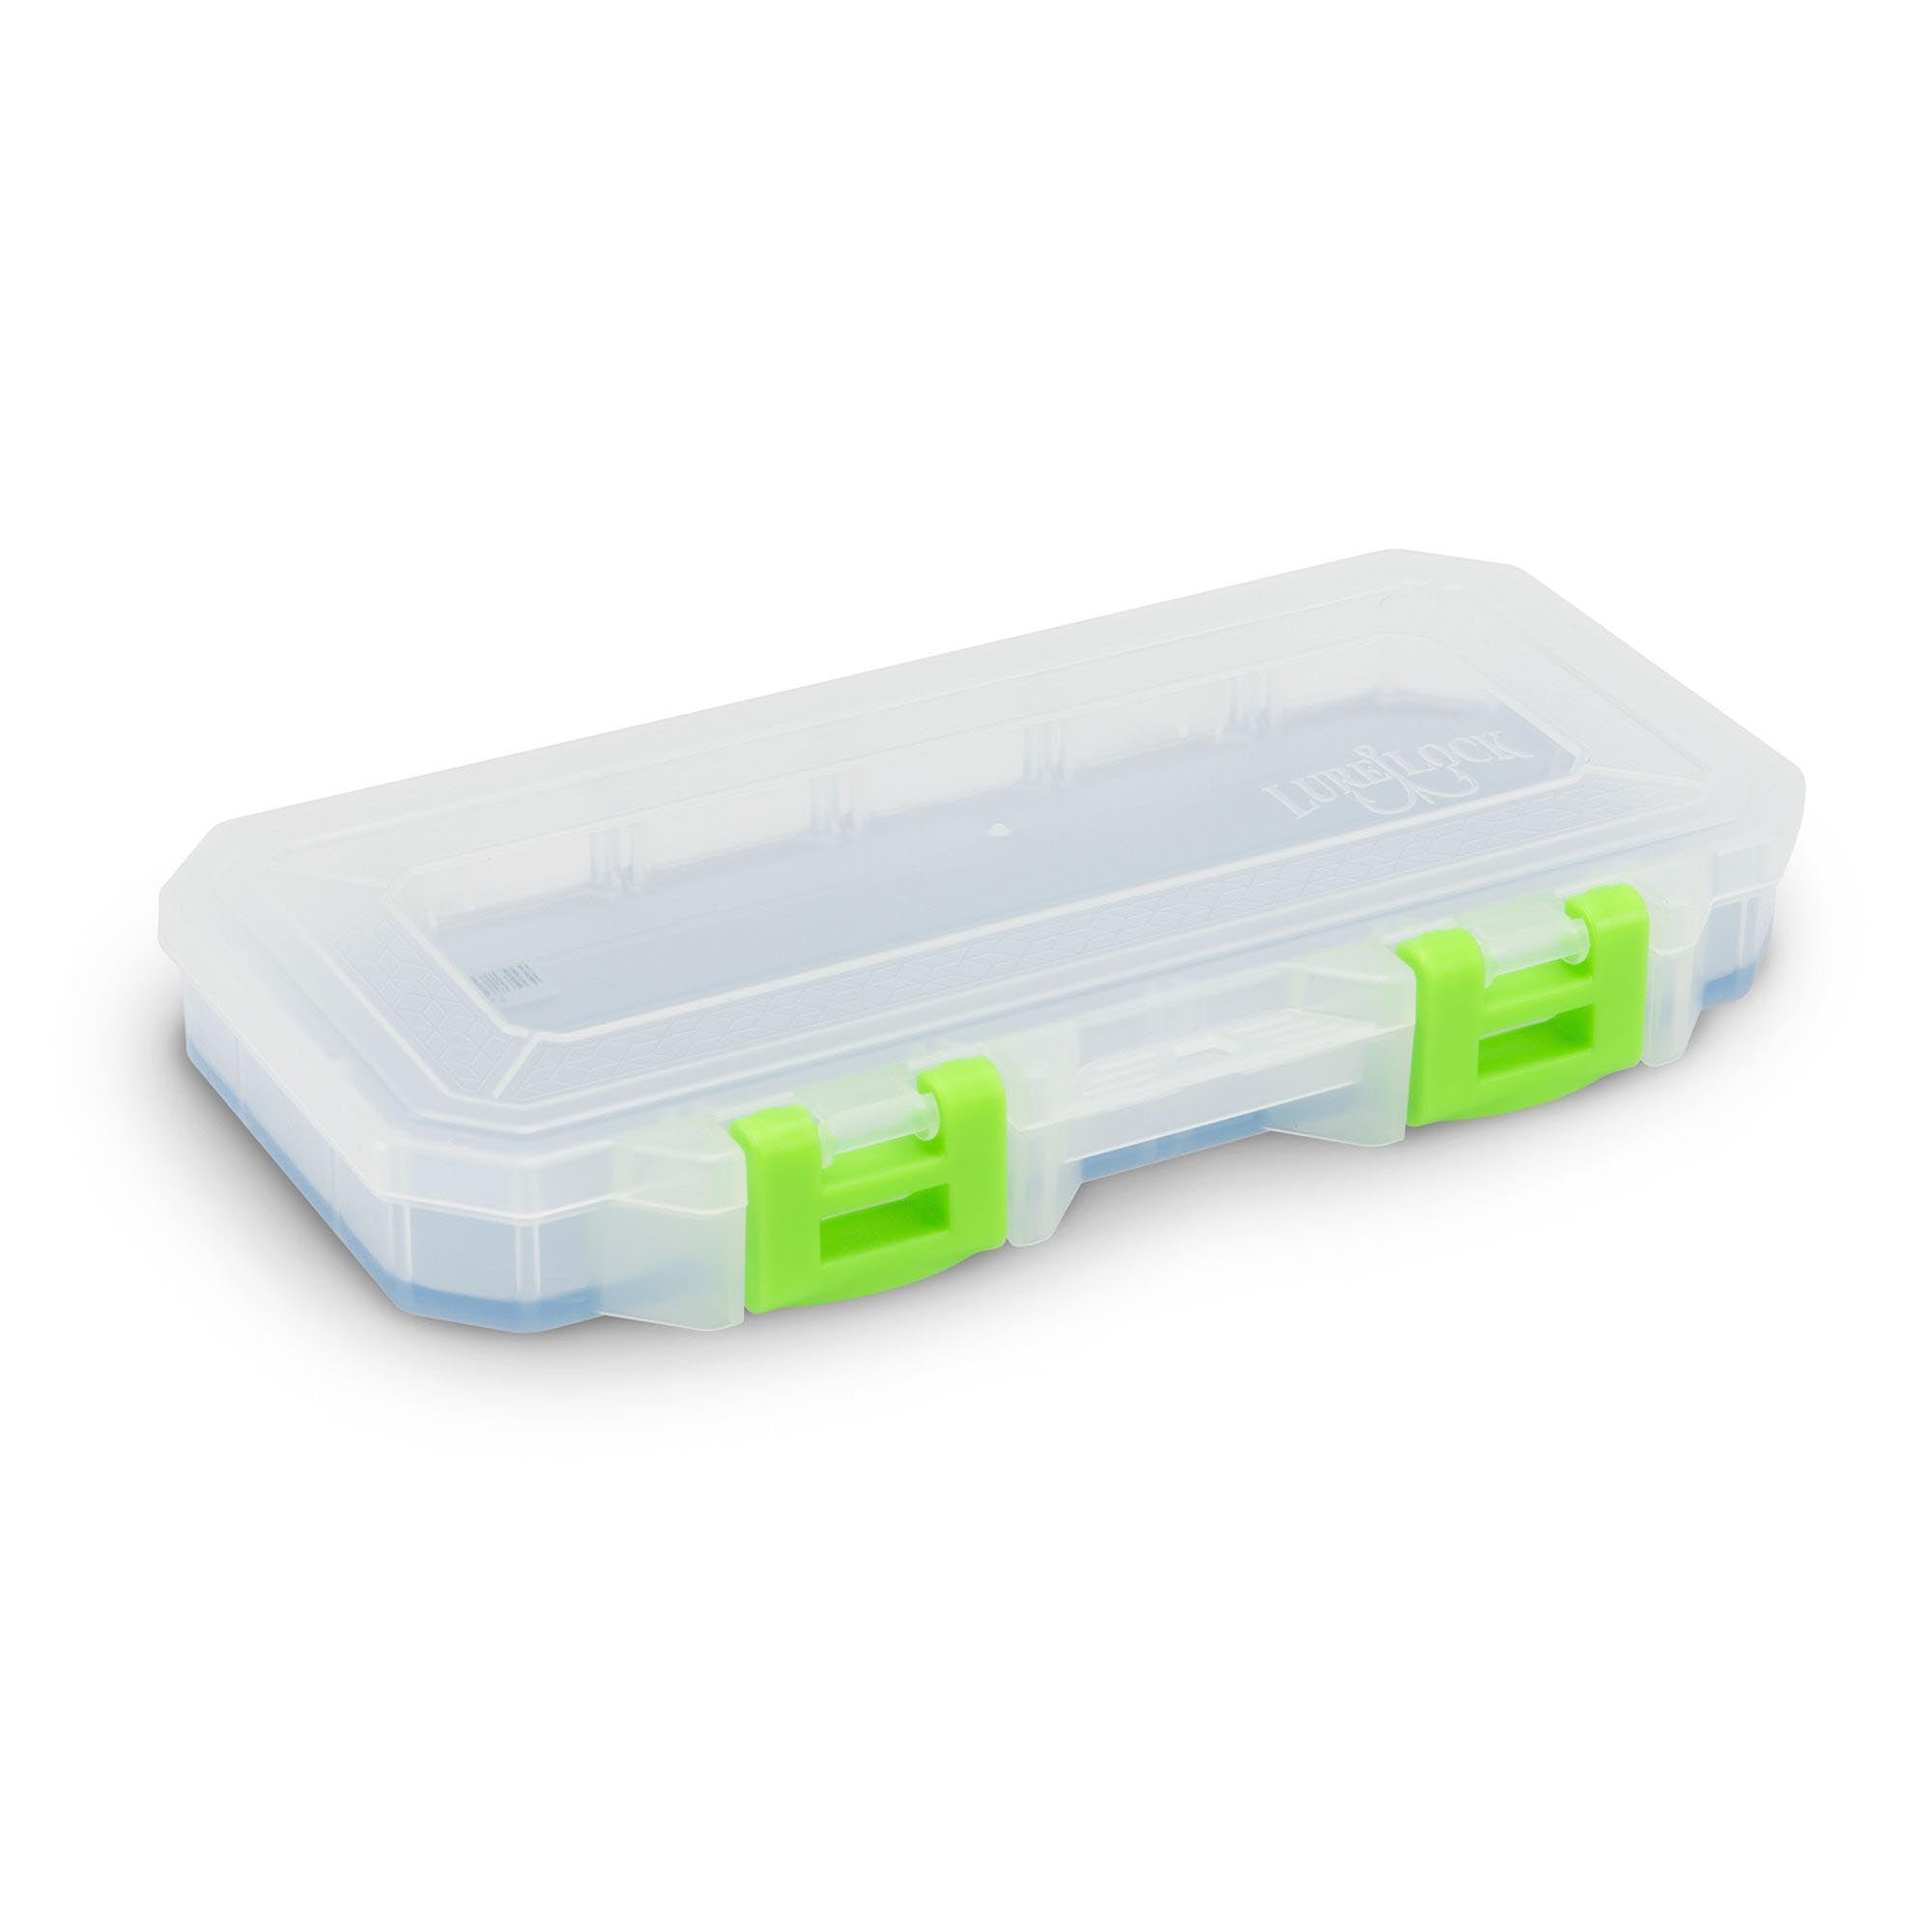 Lesovi LESOVI Fishing Lure Boxes, Waterproof Portable Tackle Box Organizer  with Storing Tackle Set Plastic Storage - Mini Utility Lures